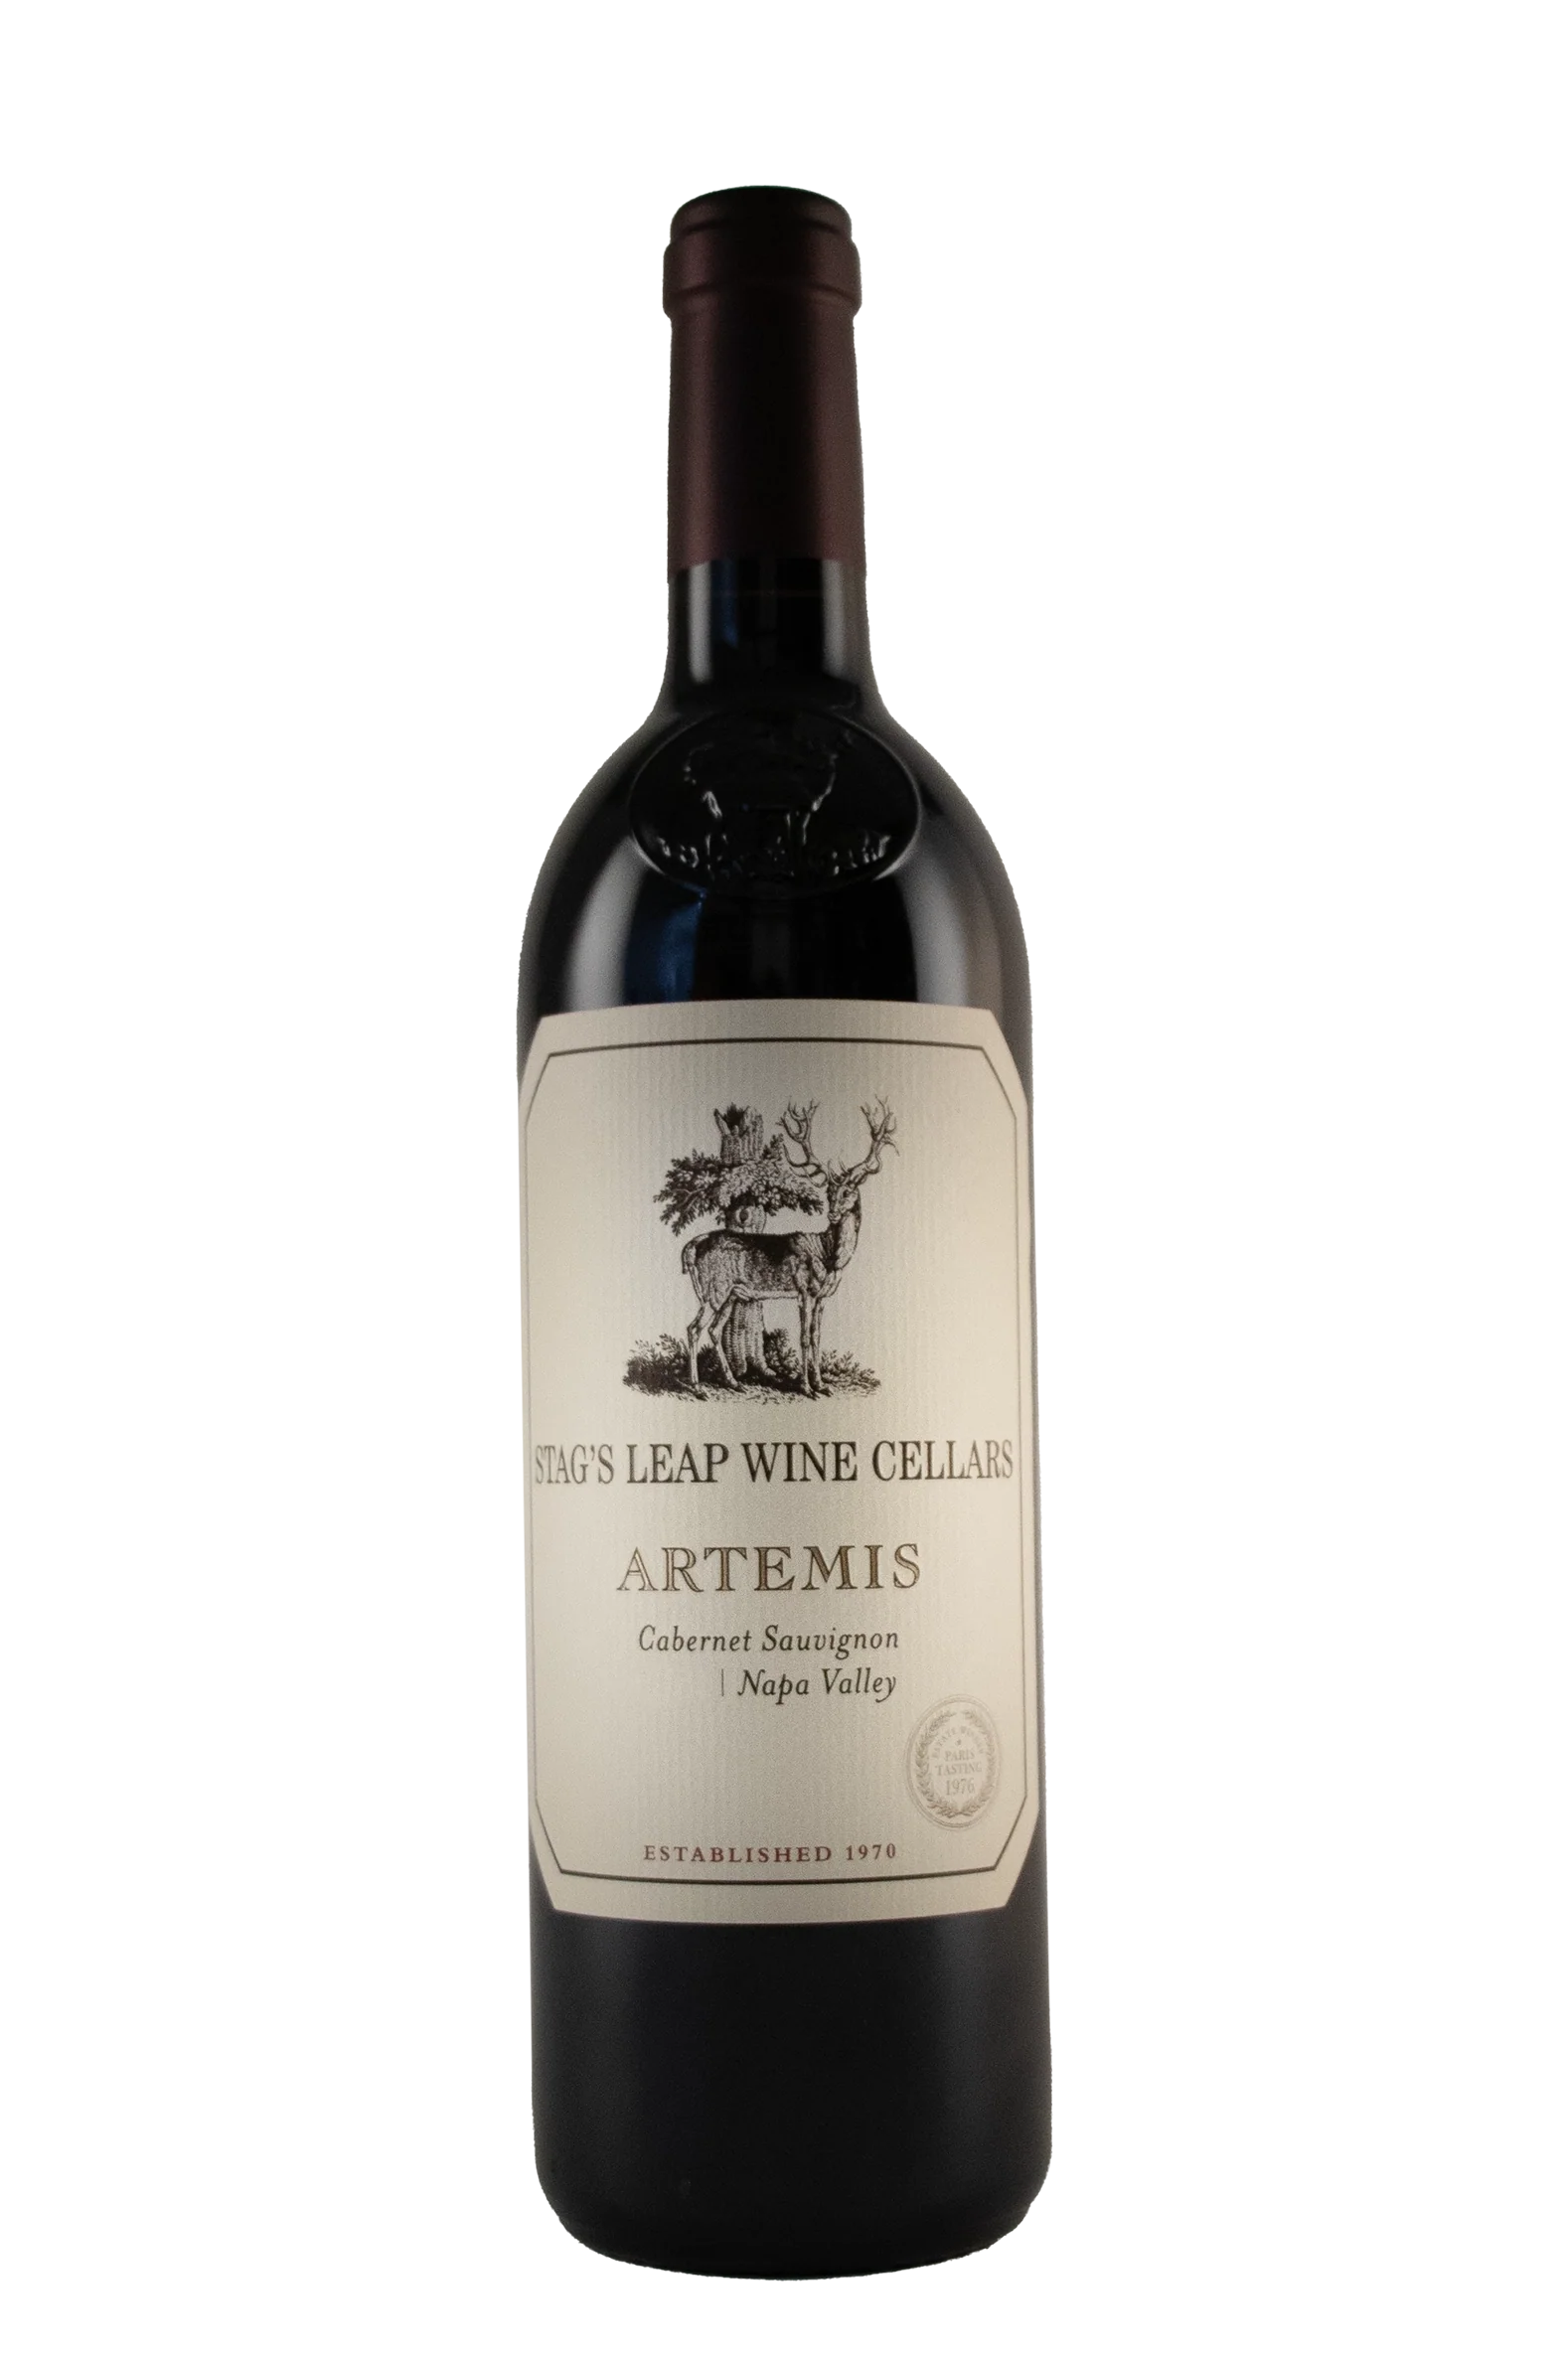 Stag's Leap Wine Cellars Artemis Cabernet